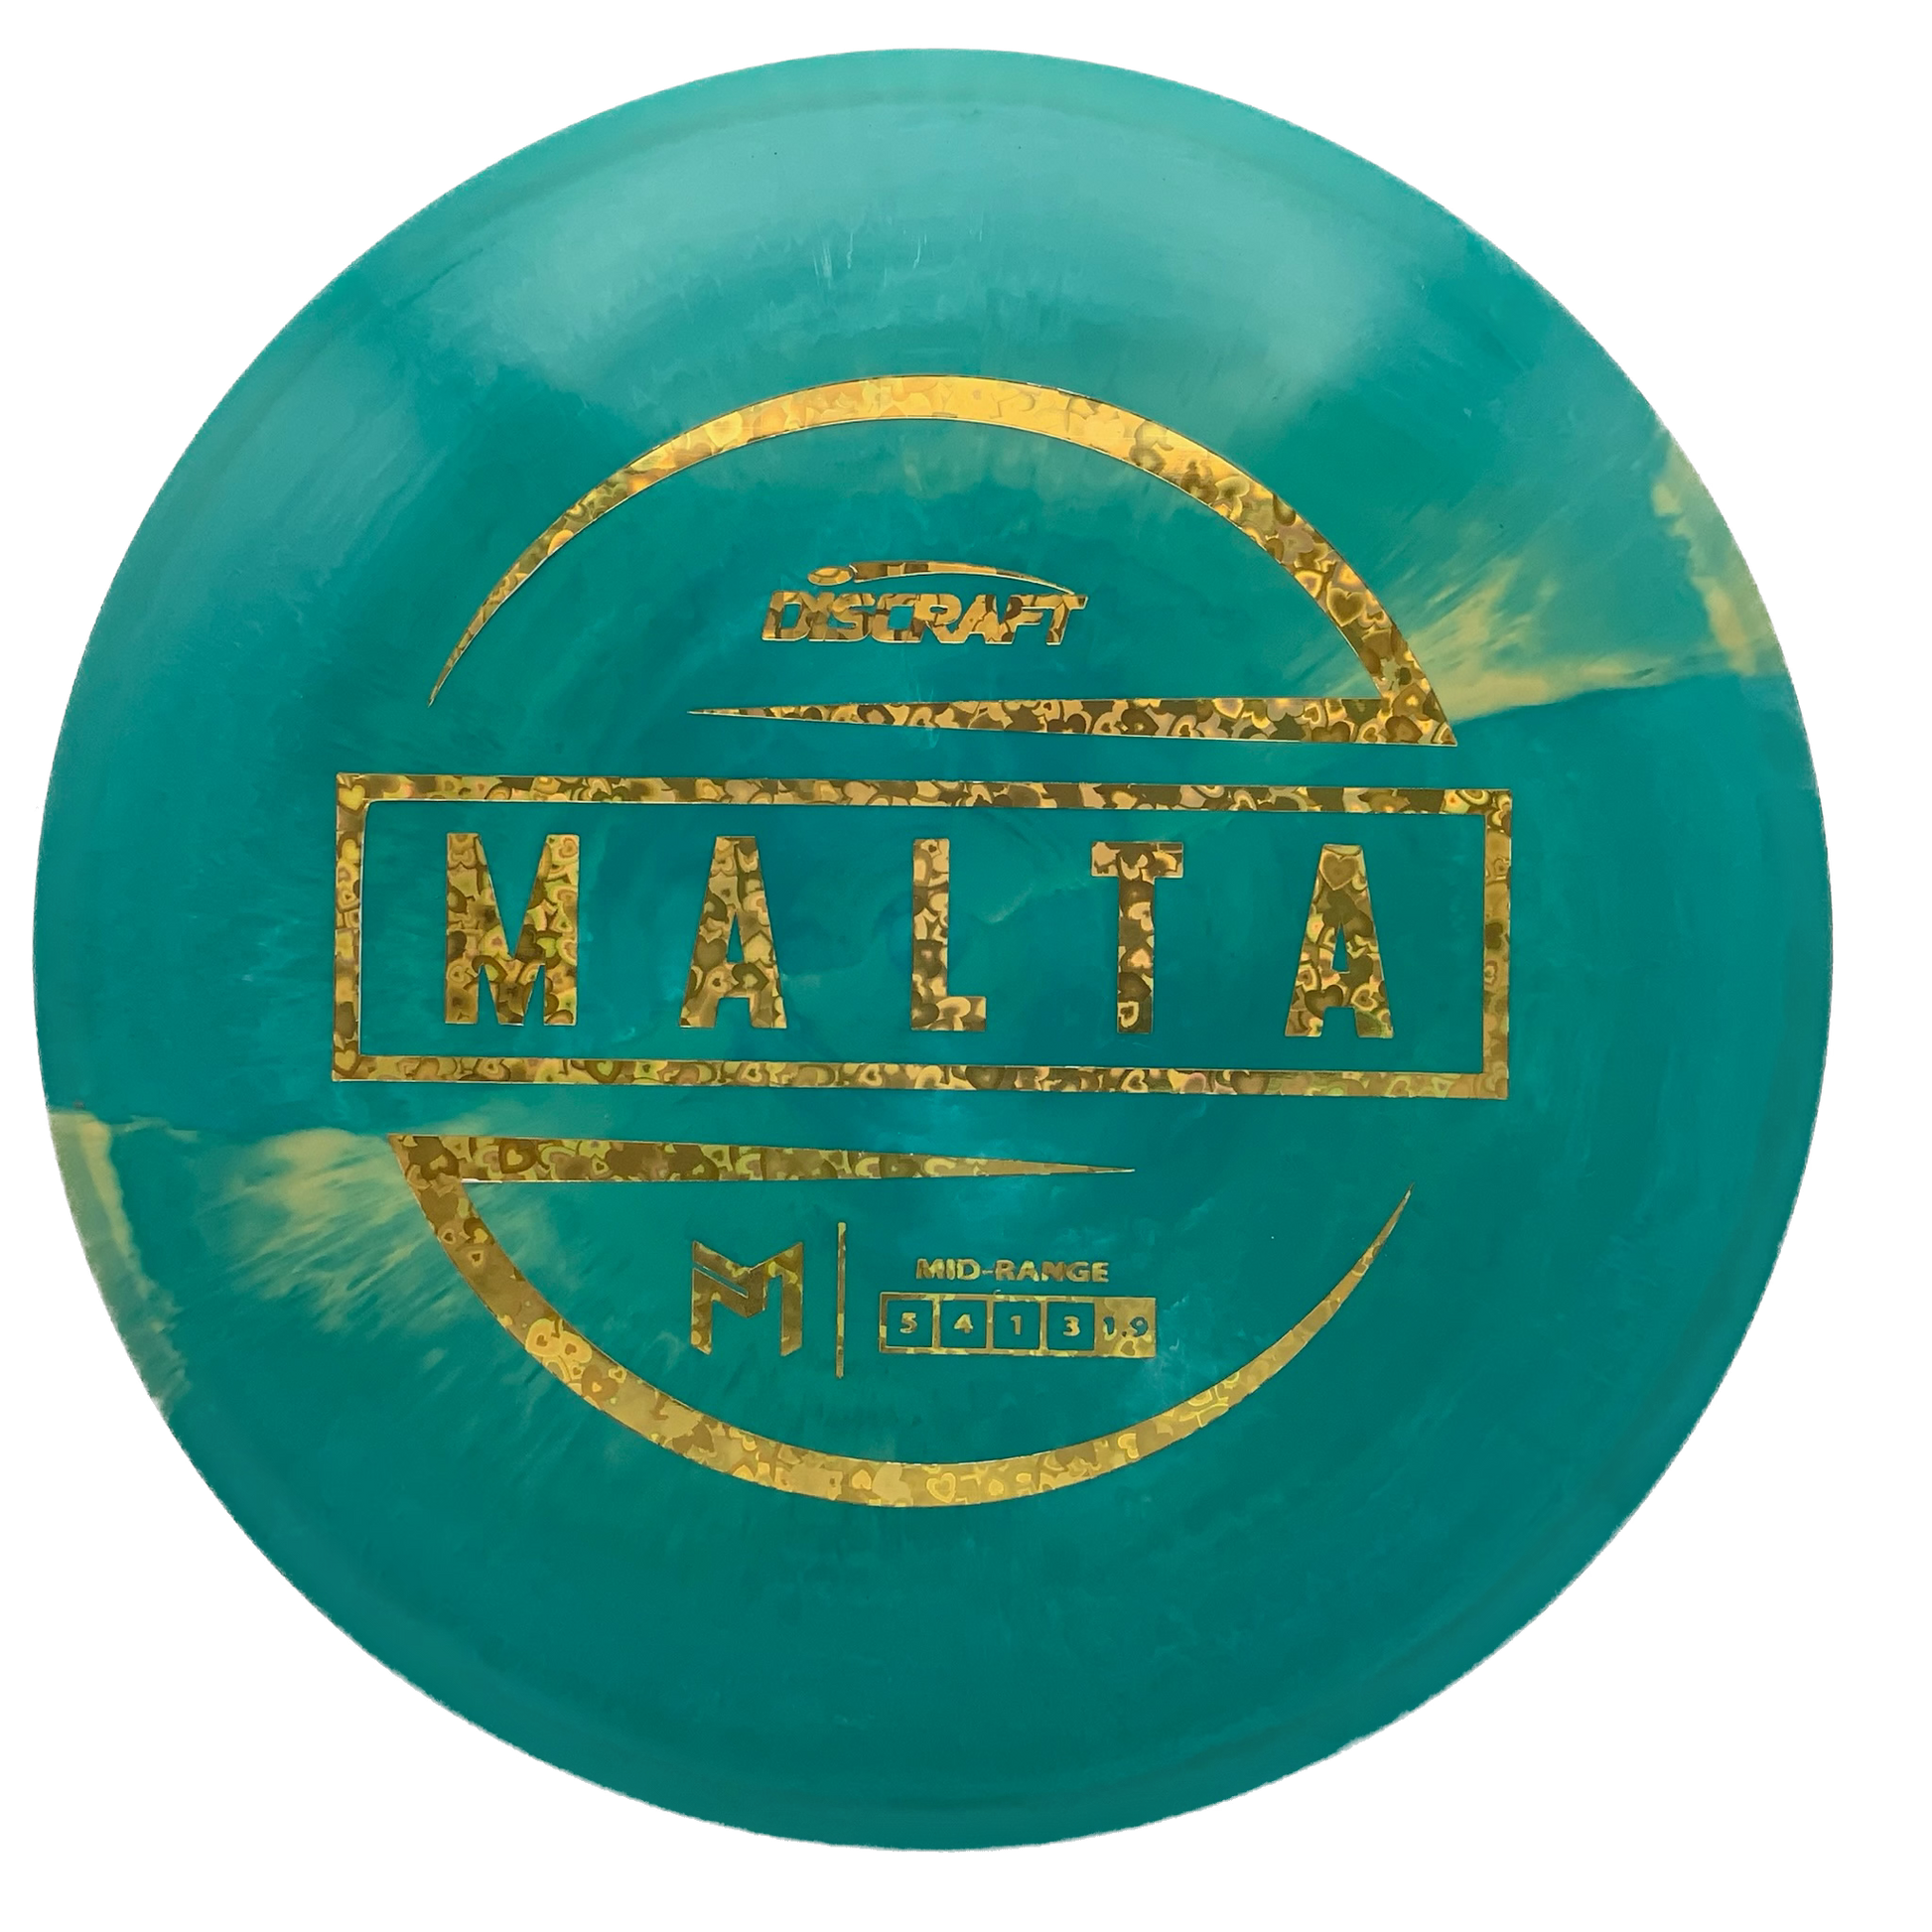 Discraft Malta - Astro Discs TX - Houston Disc Golf